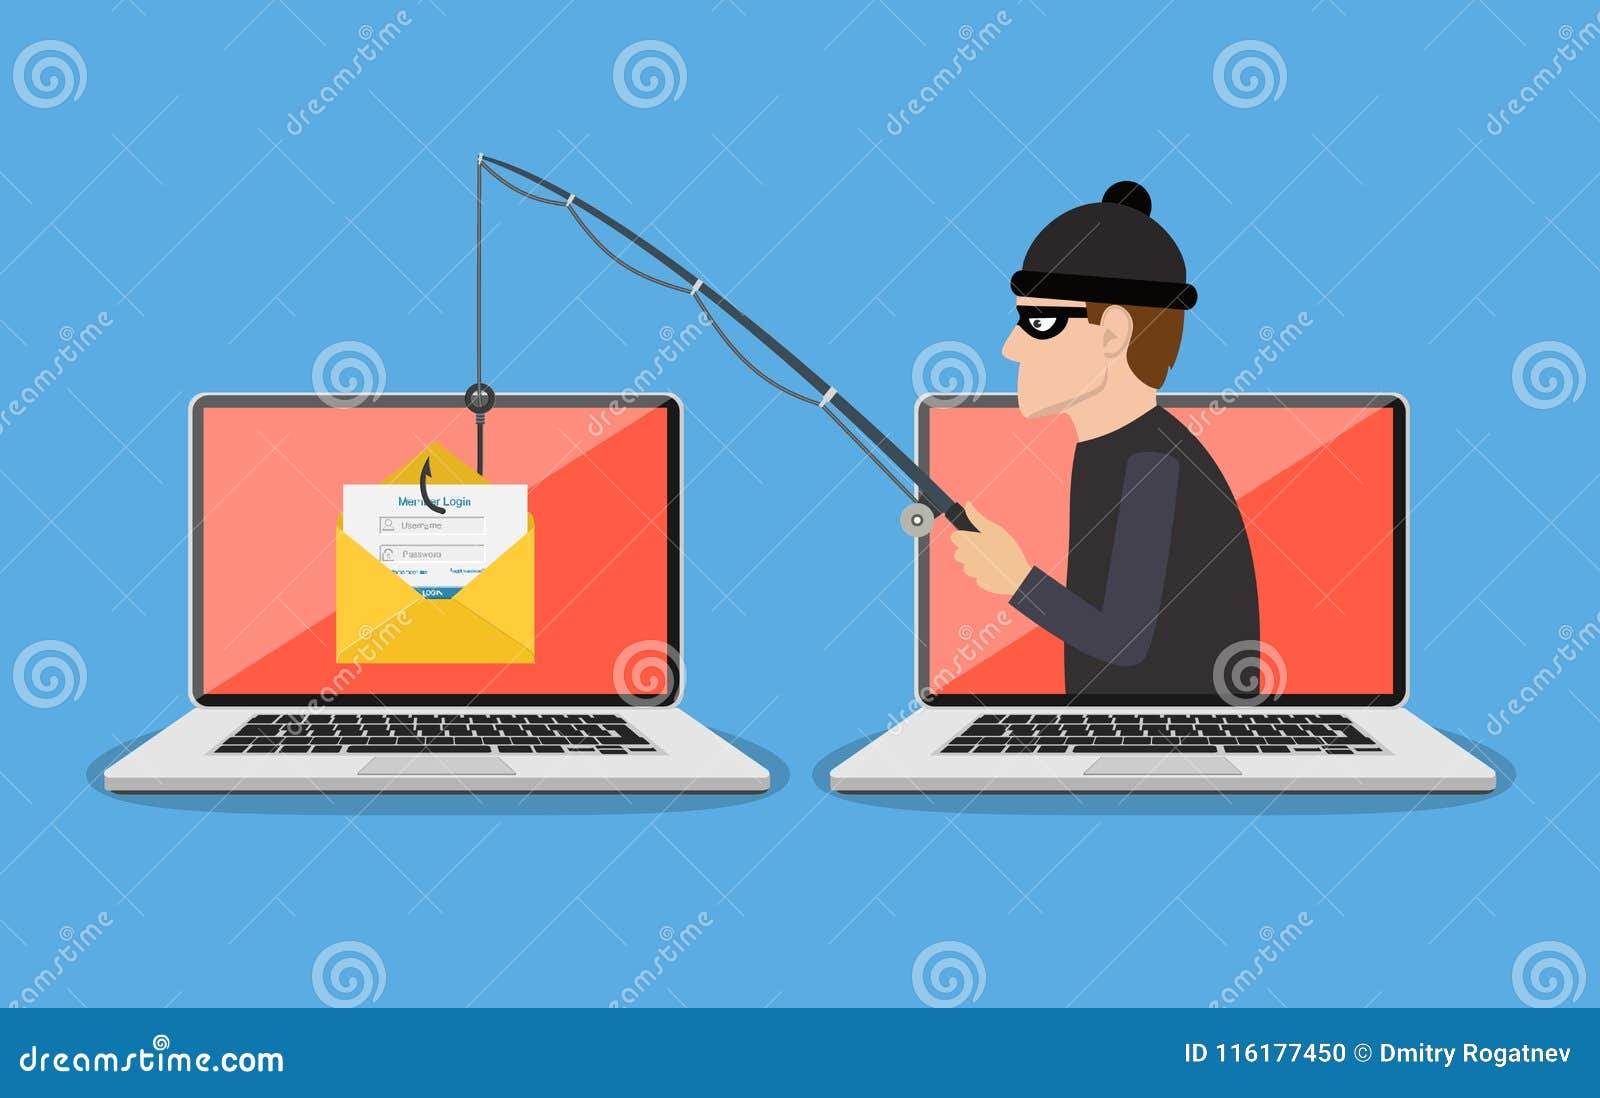 phishing scam, hacker attack